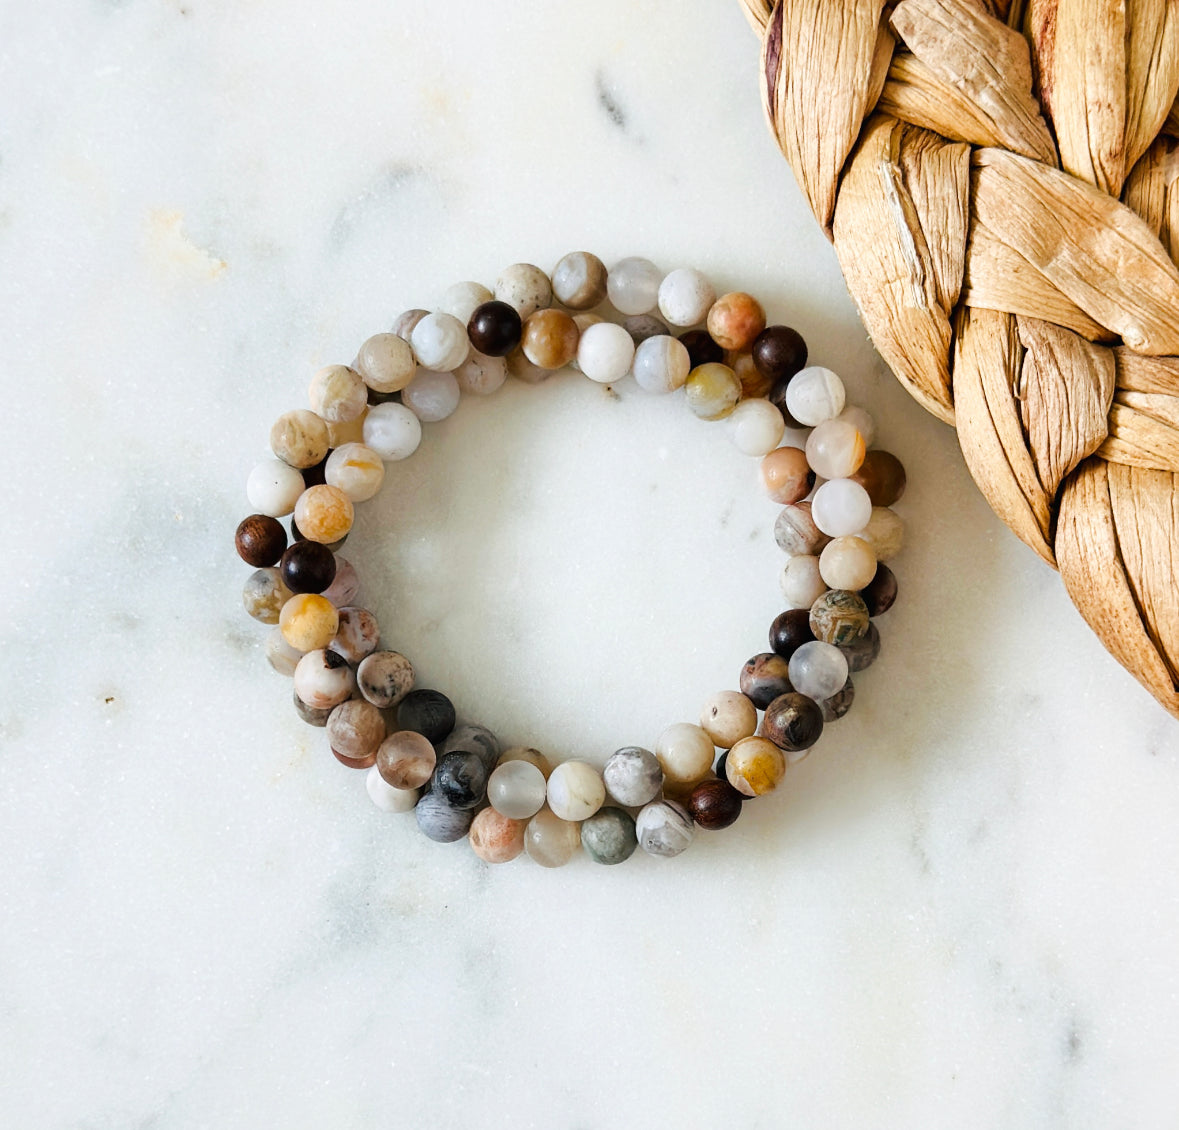 Gemstone wrap bracelet created with Bamboo Leaf Agate and Sandalwood